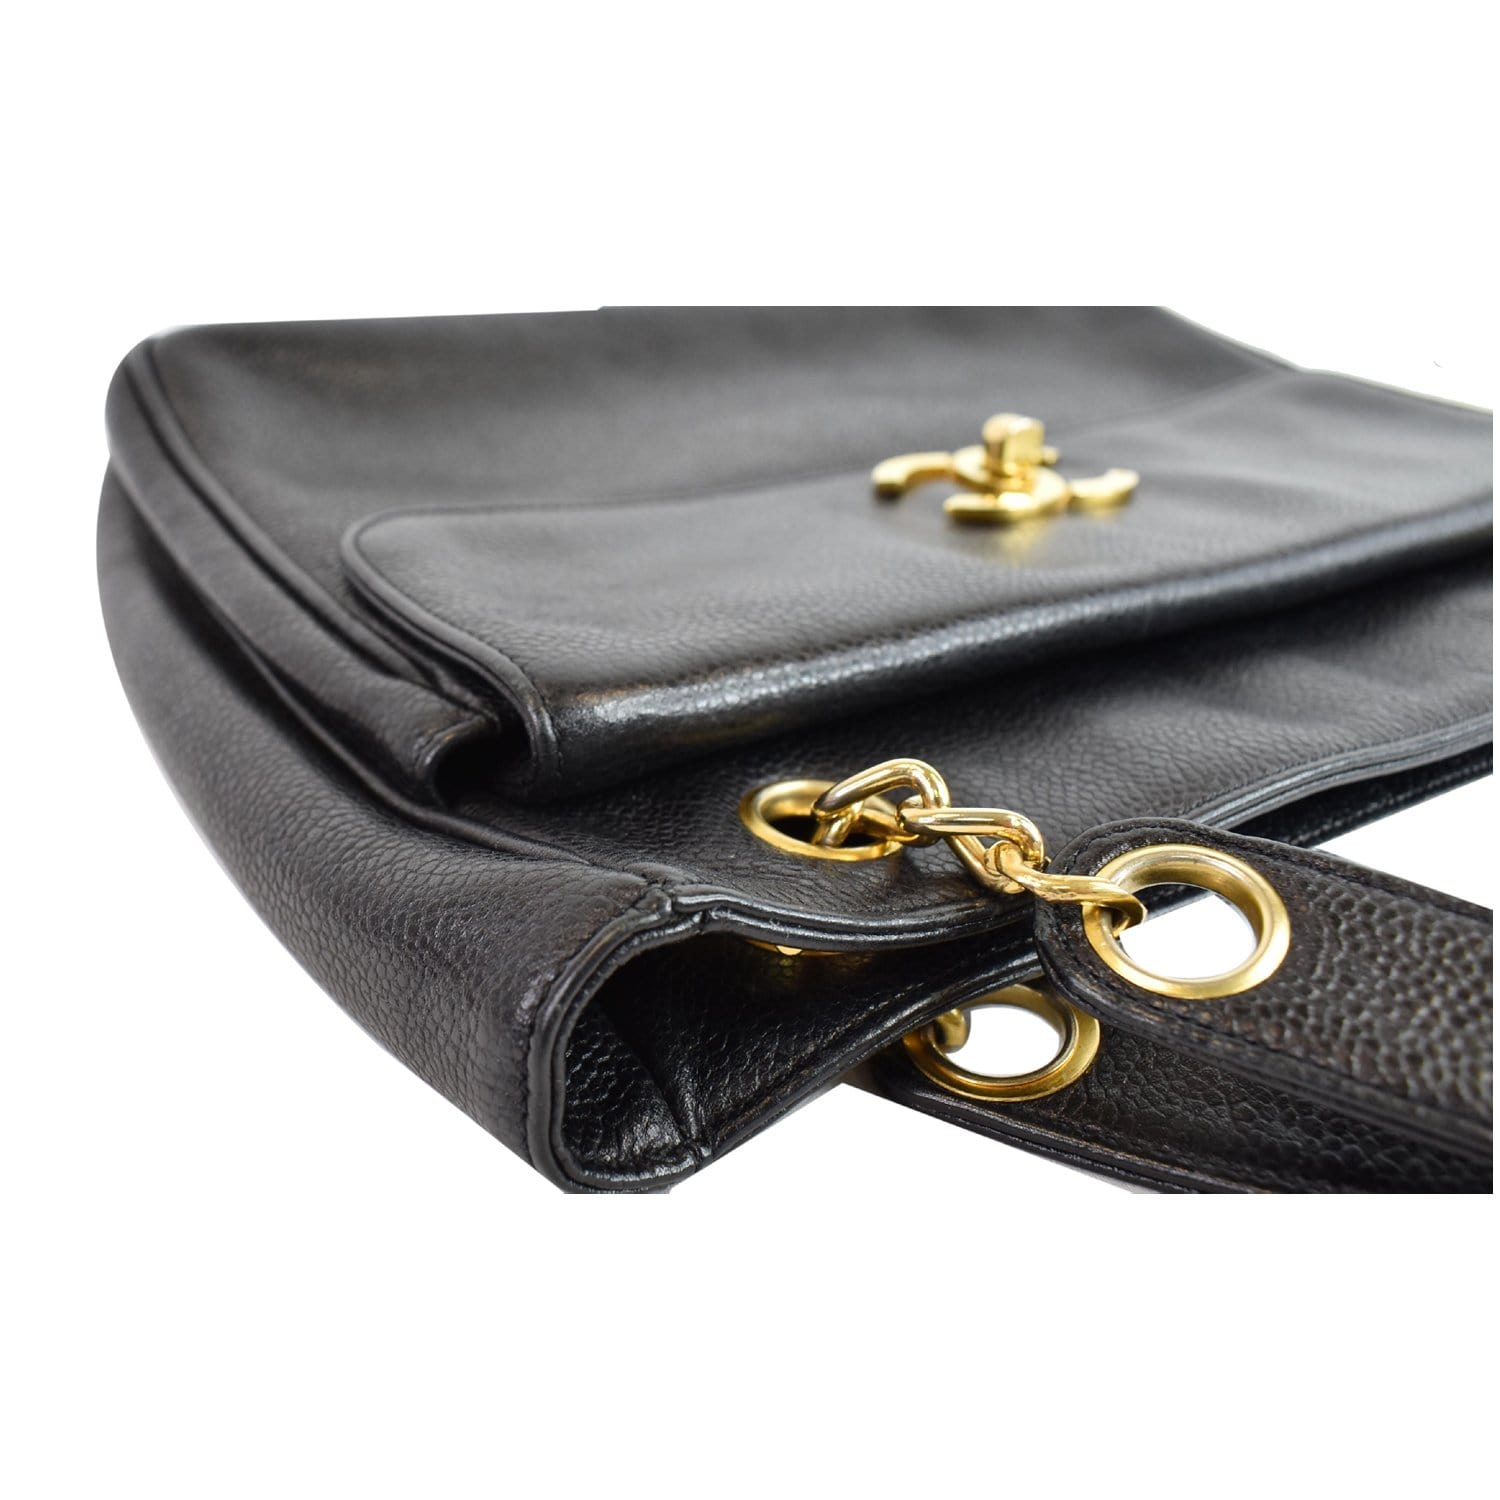 Authentic Chanel Black Vintage Classic Small Double Flap Bag 2.5